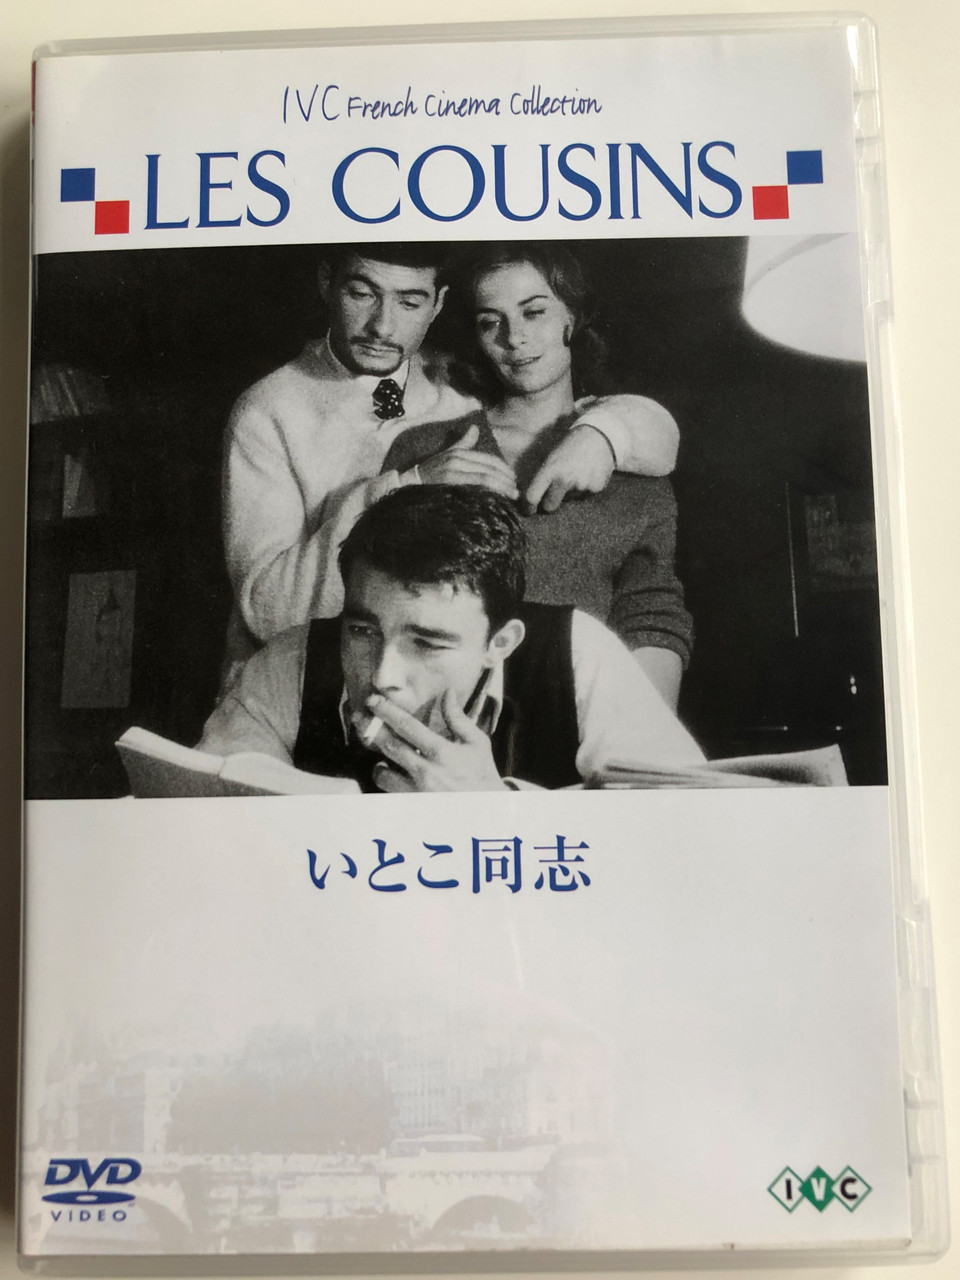 Les Cousins DVD 1956 いとこ同志 / Directed by Claude Chabrol / Starring: Gérard  Blain, Jean-Claude Brialy, Juliette Mayniel - bibleinmylanguage